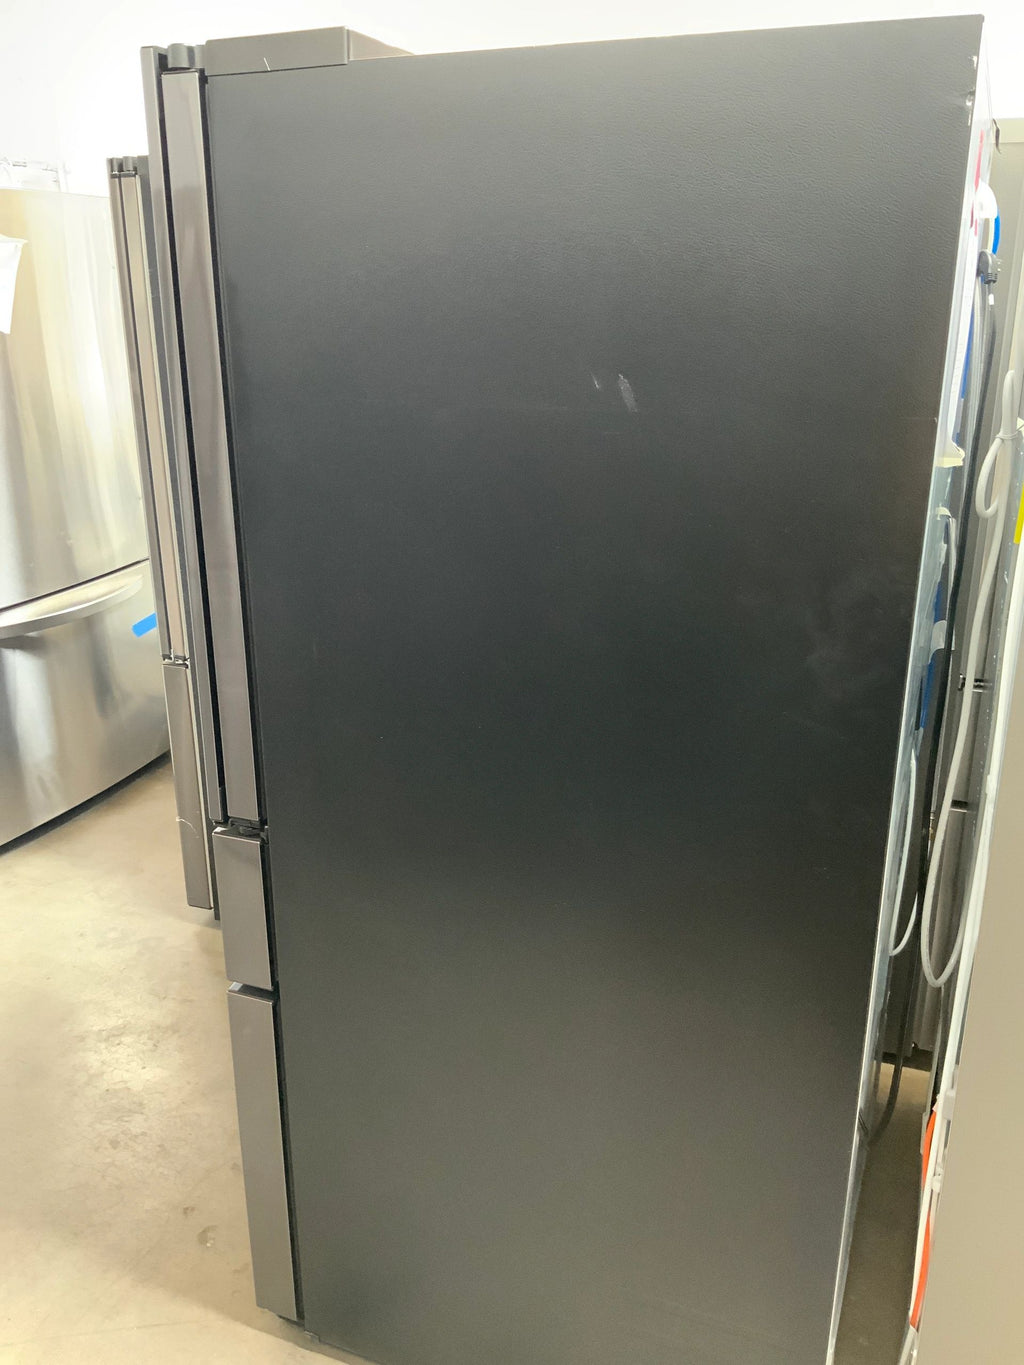 New Open Box 28 cu. ft. Food Showcase 4-Door French Door Refrigerator in Black Stainless Steel Model: RF28R7351SG